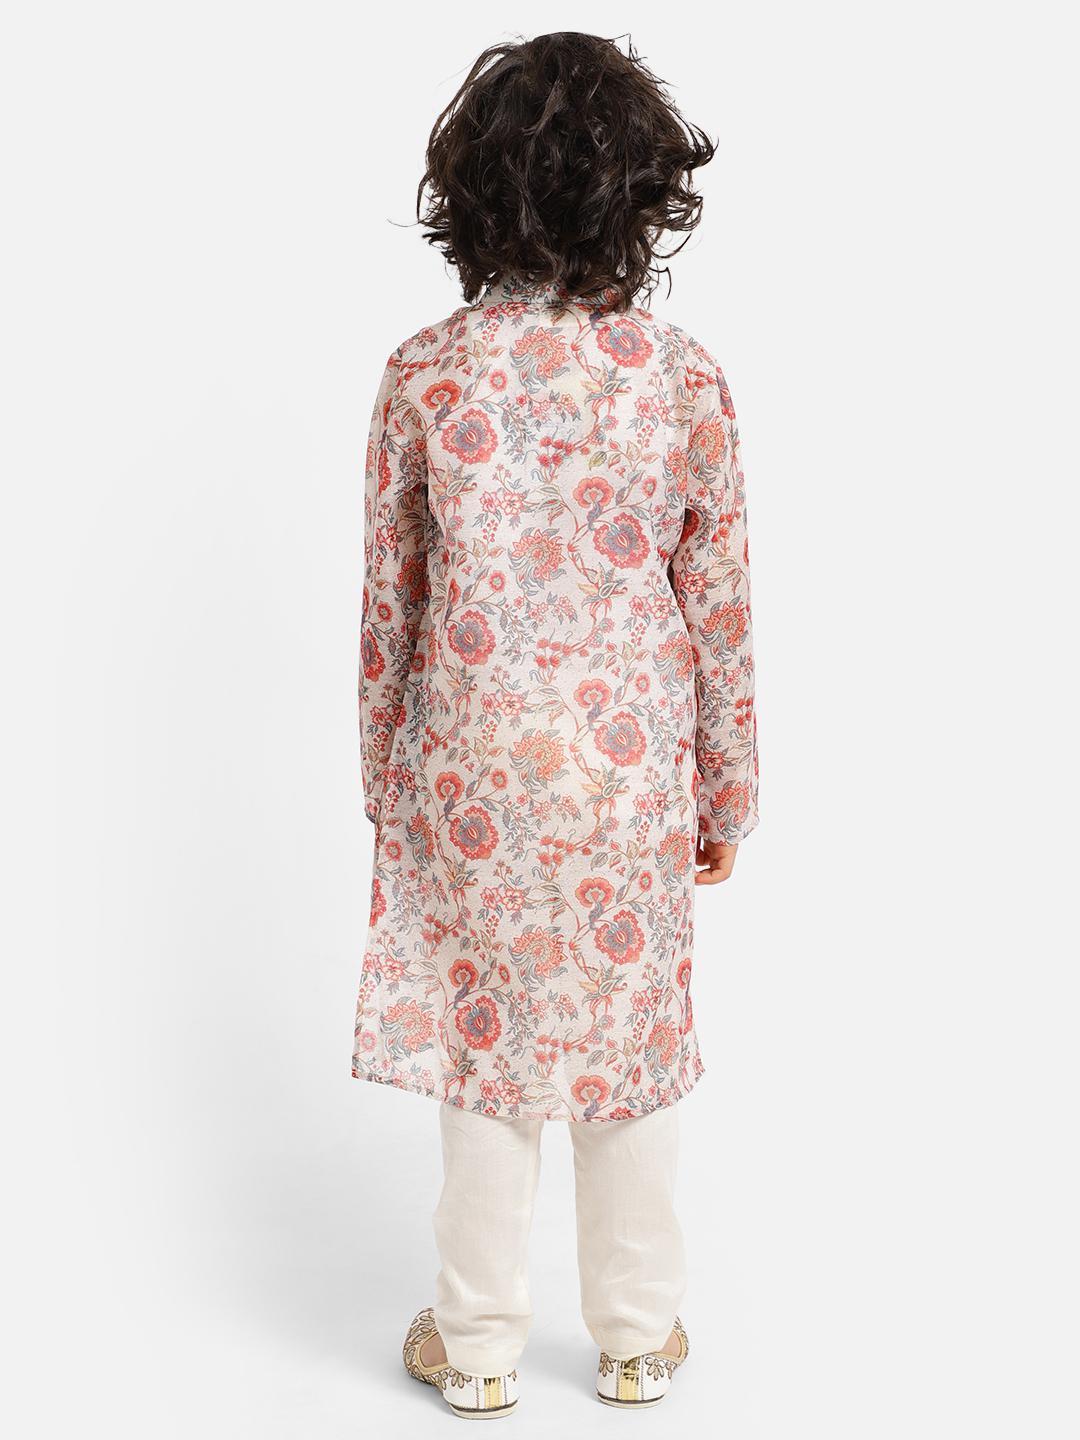 off-white-kurta-pajama-set-enhanced-with-floral-print-10520072WH, Indian Kids Clothing, Satin Boy Kurta Pajama Set